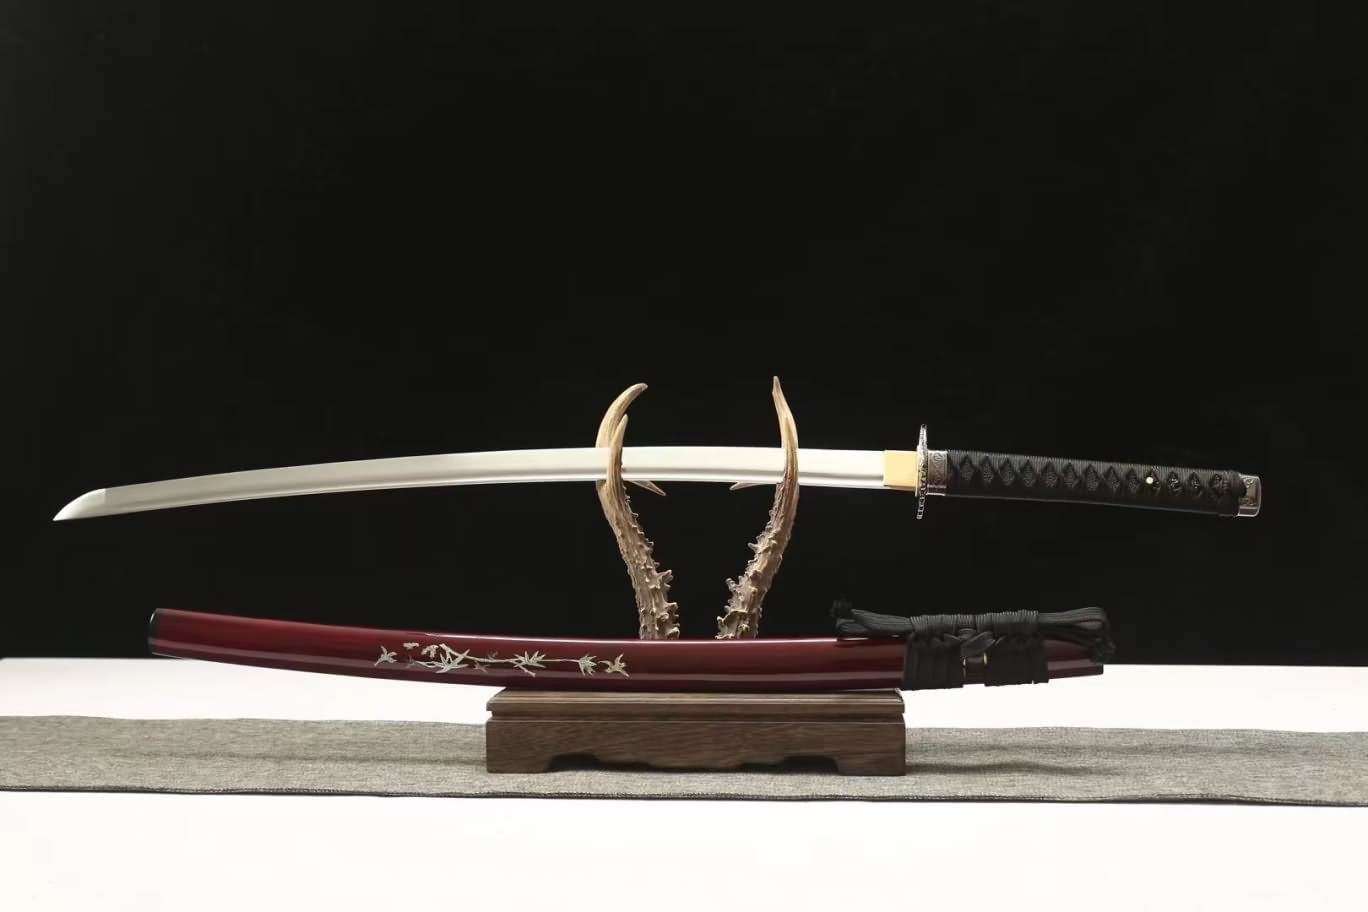 Samruai Sword Real katanas,Full Tang,Forged High Carbon Steel Blades,Battle Ready